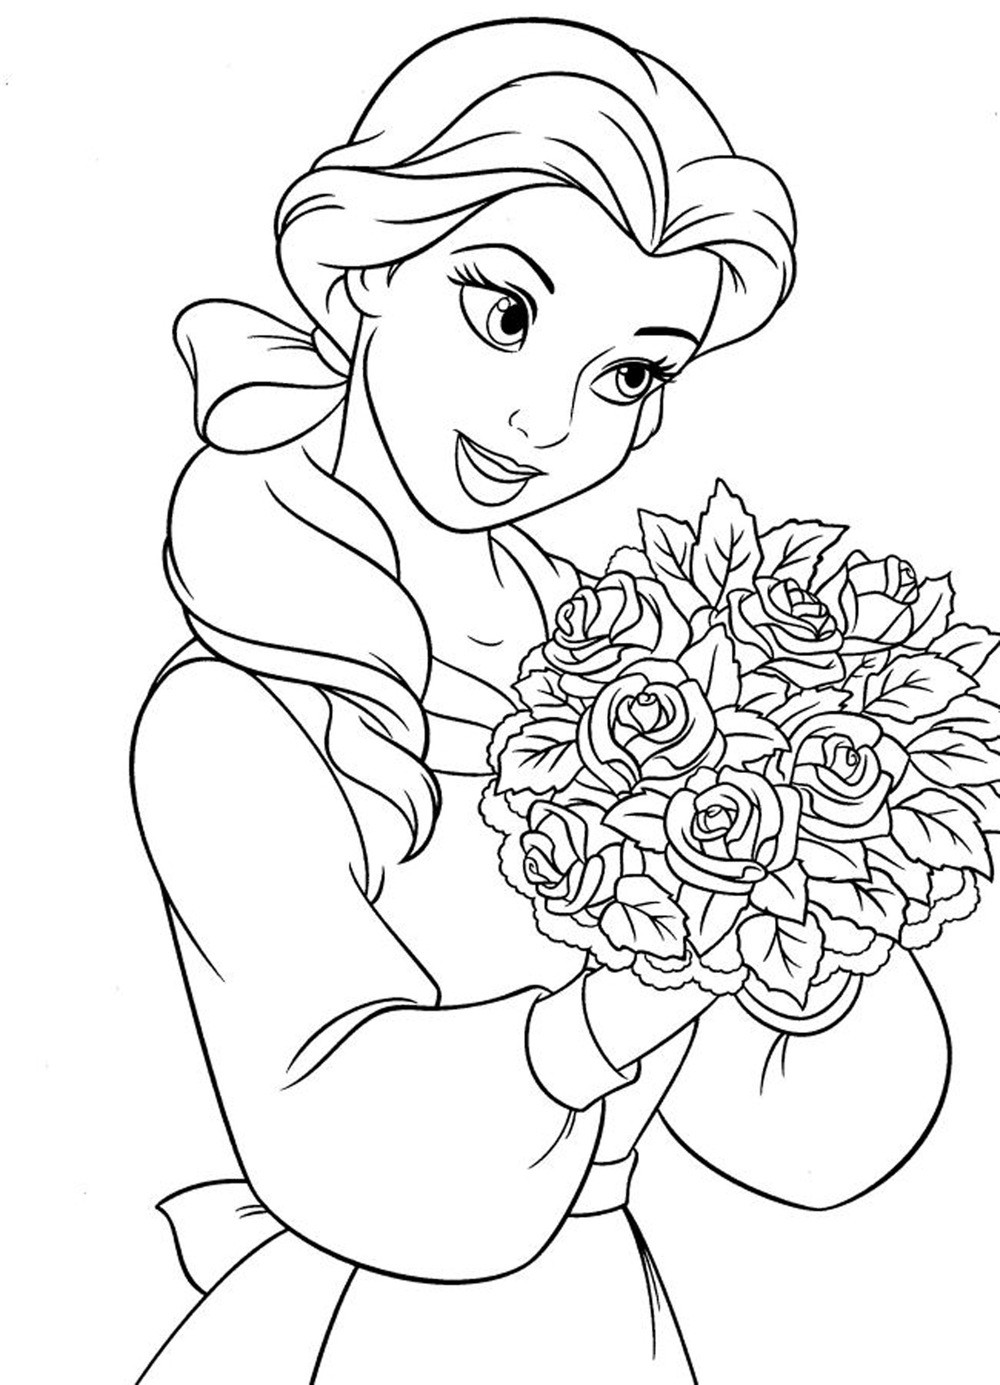 Printable Disney Coloring Pages
 Disney Princess Tiana Coloring Page Disney